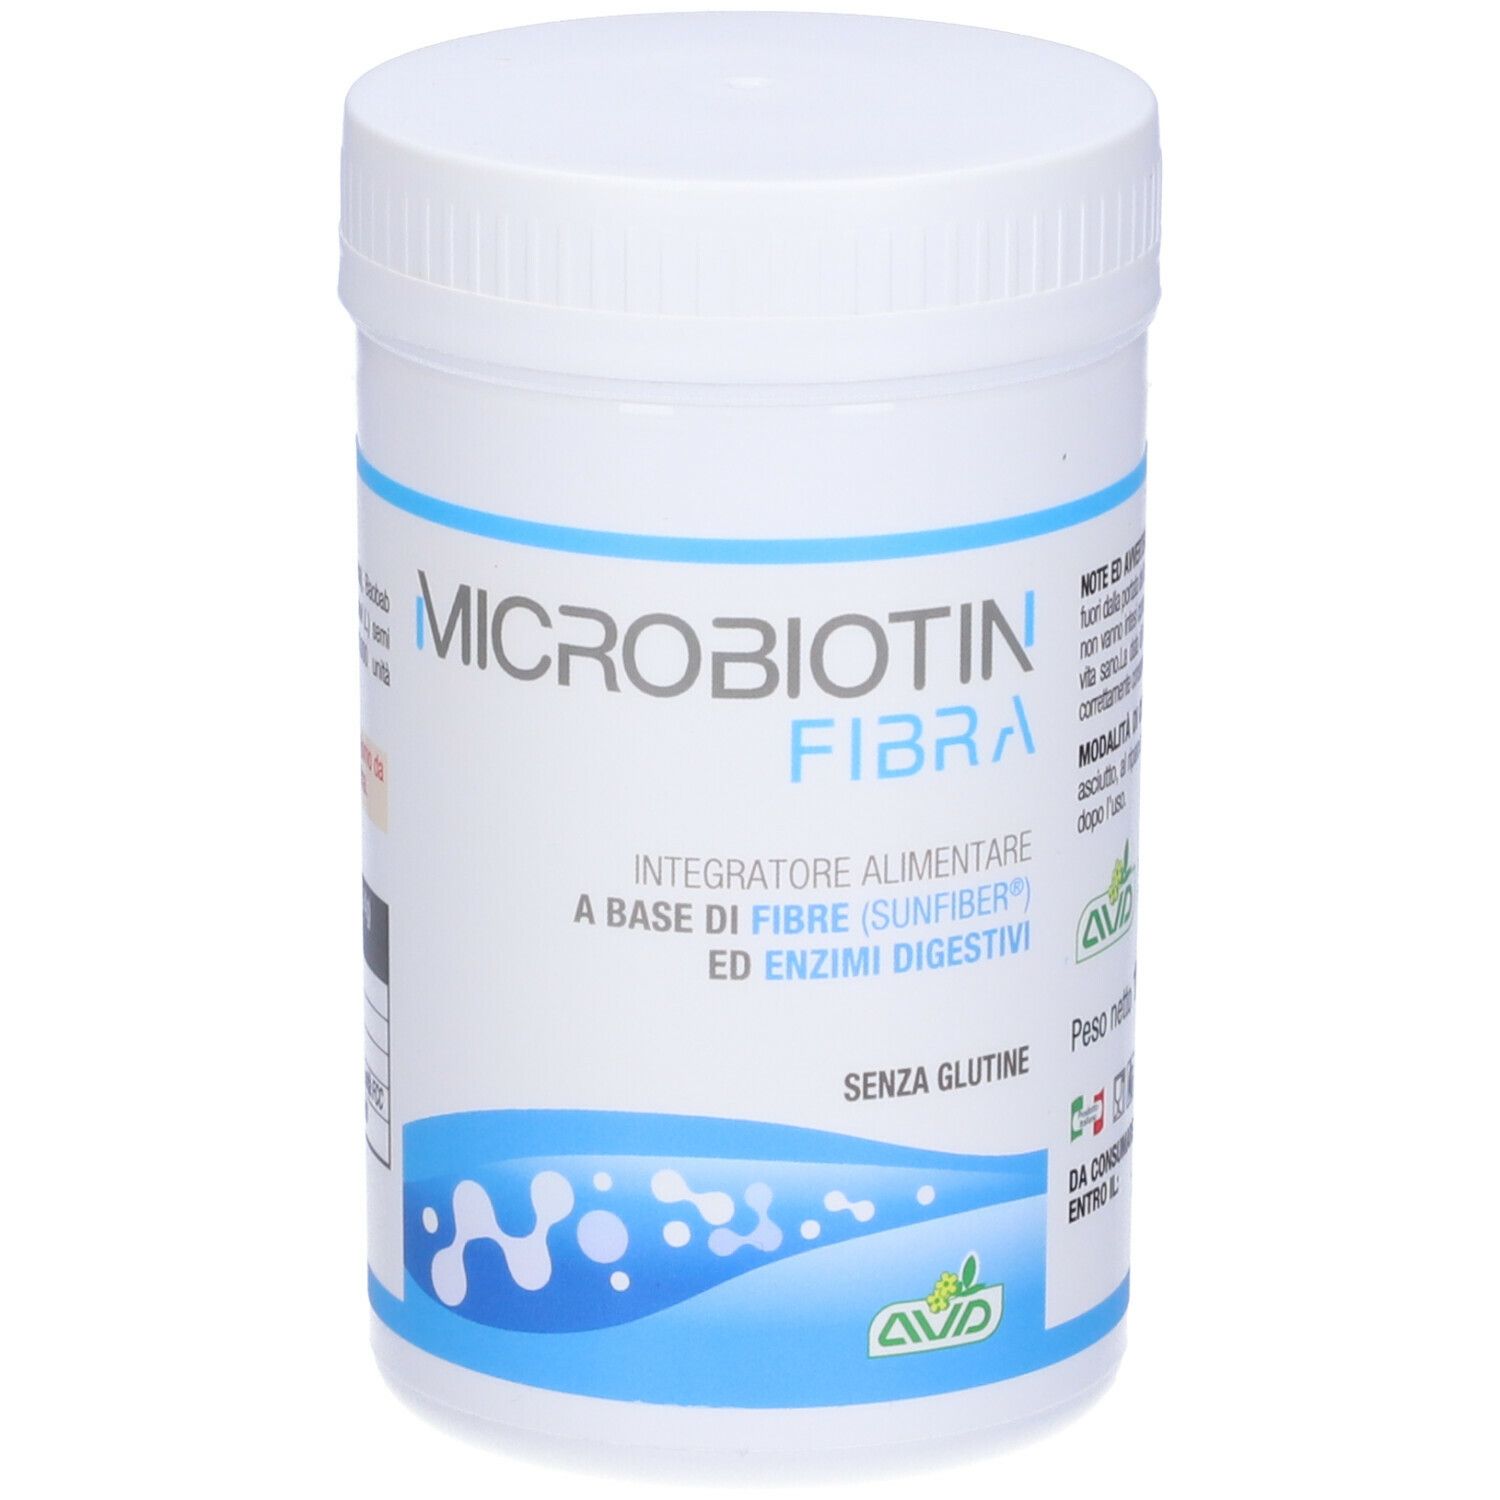 Image of Microbiotin Fibra Integratore Alimentare